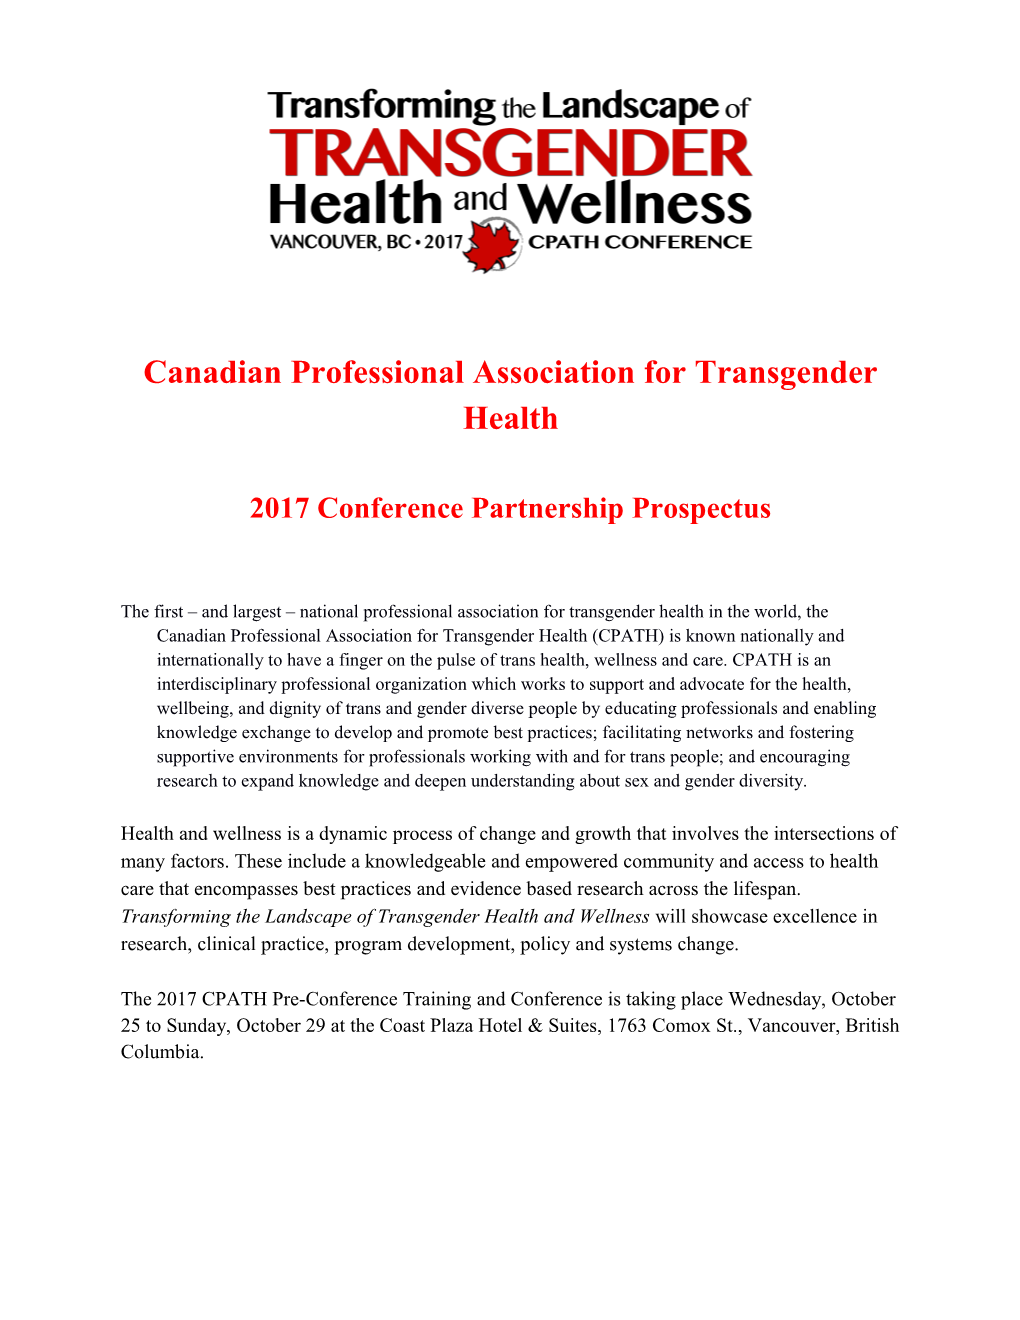 Canadian Professional Association for Transgender Health